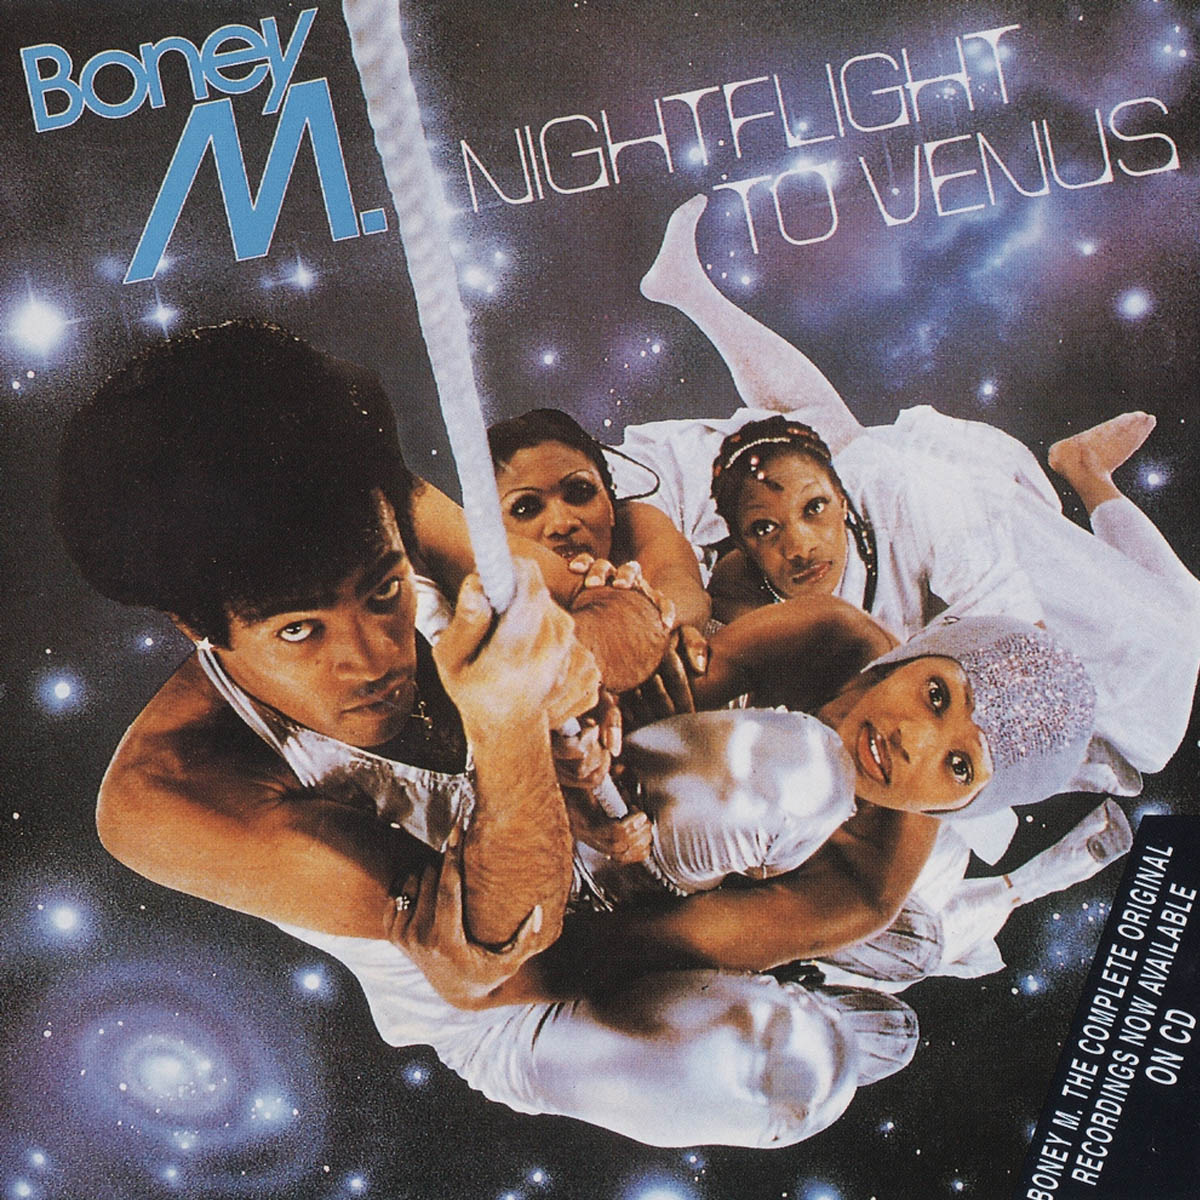 Capa do álbum "Nightflight to Venus" (1078) de Boney M.